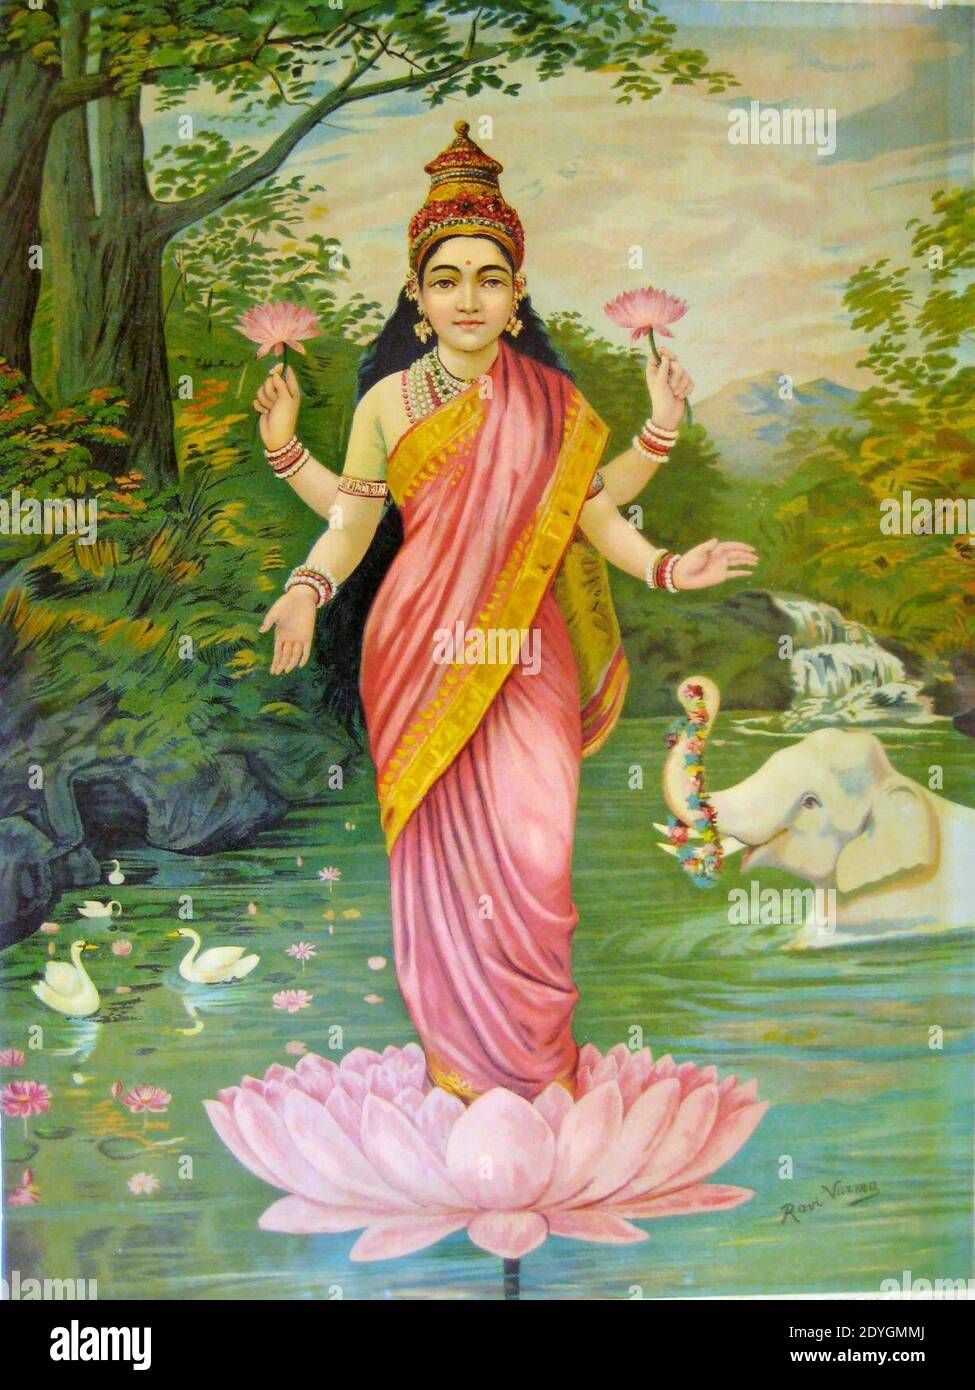 Lakshmi by Raja Ravi Varma. Stock Photo